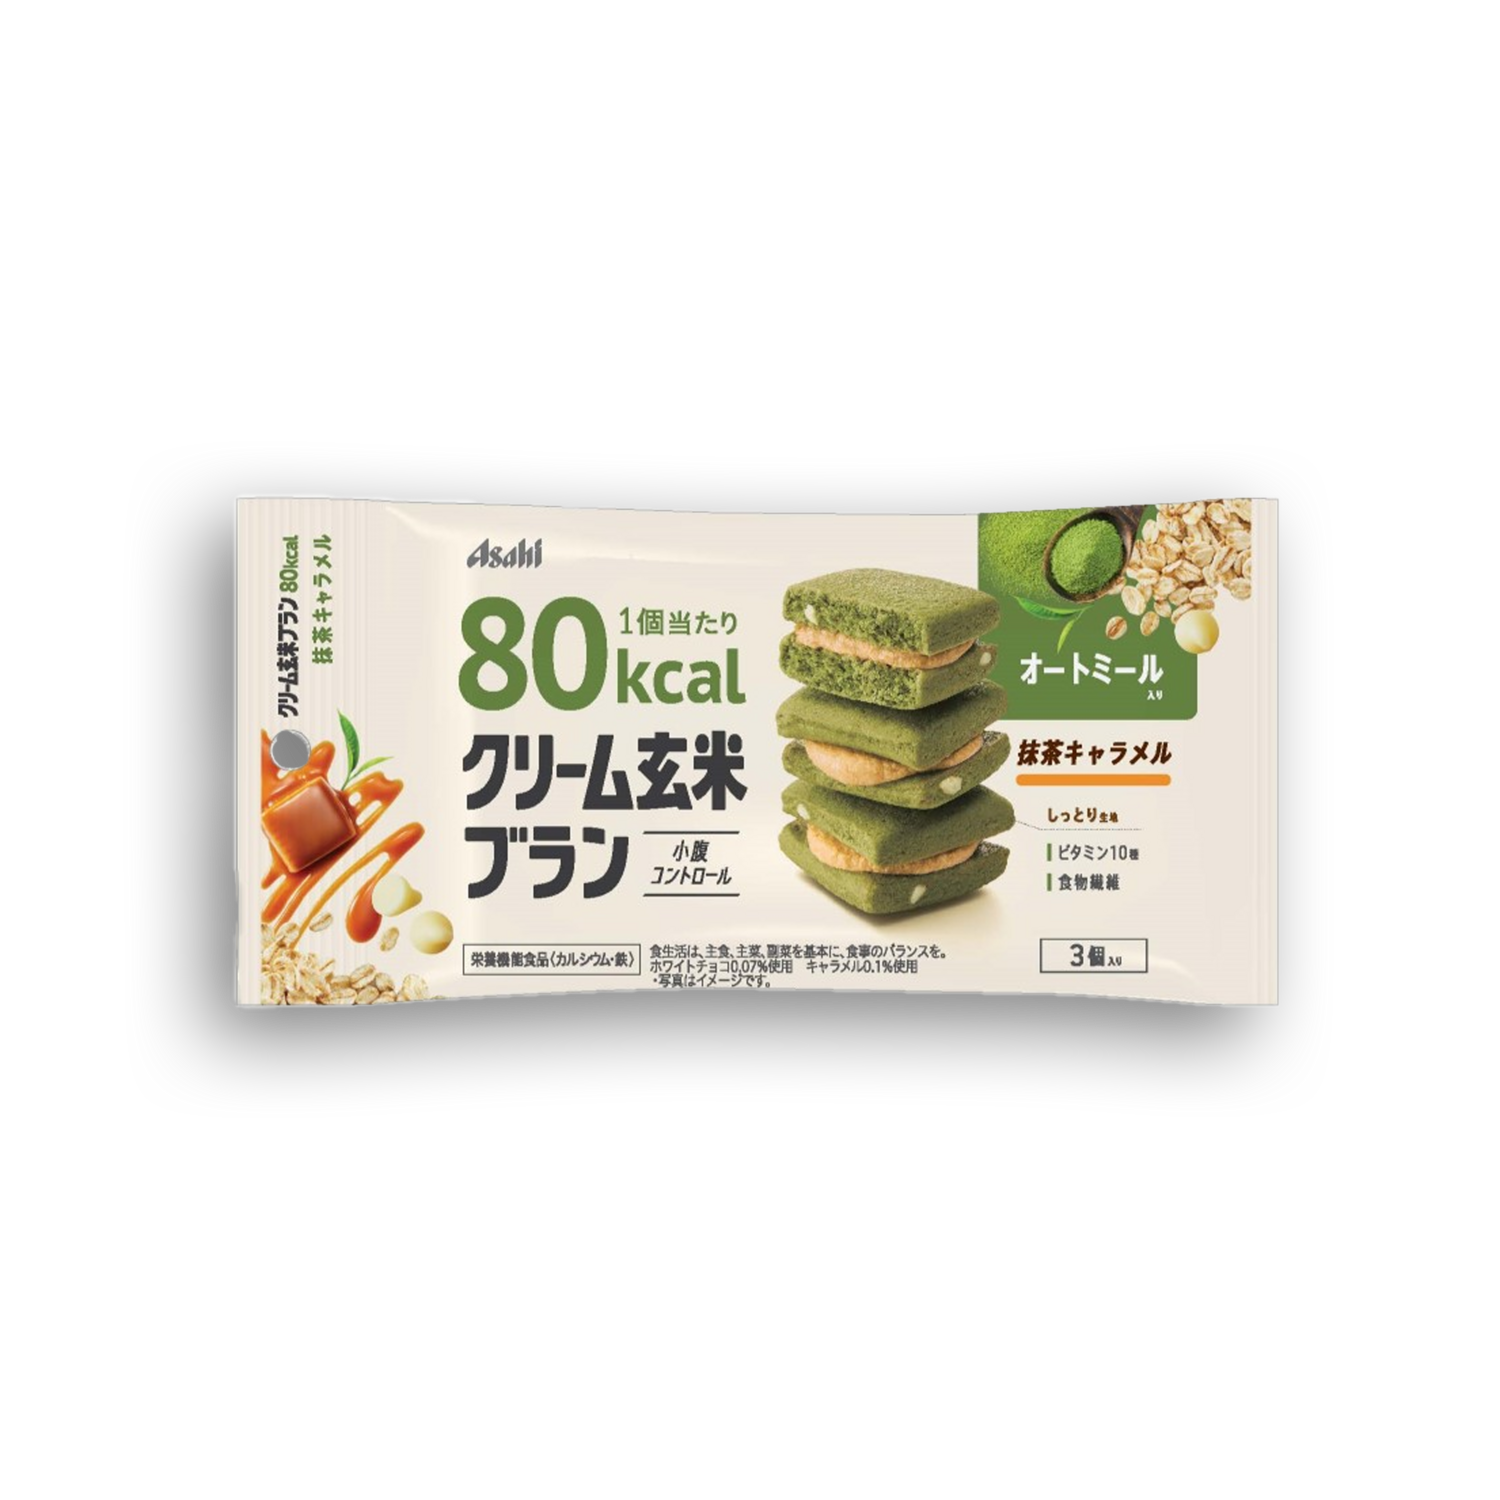 Asahi 80kcal Matcha Genmai Brownie (54G)